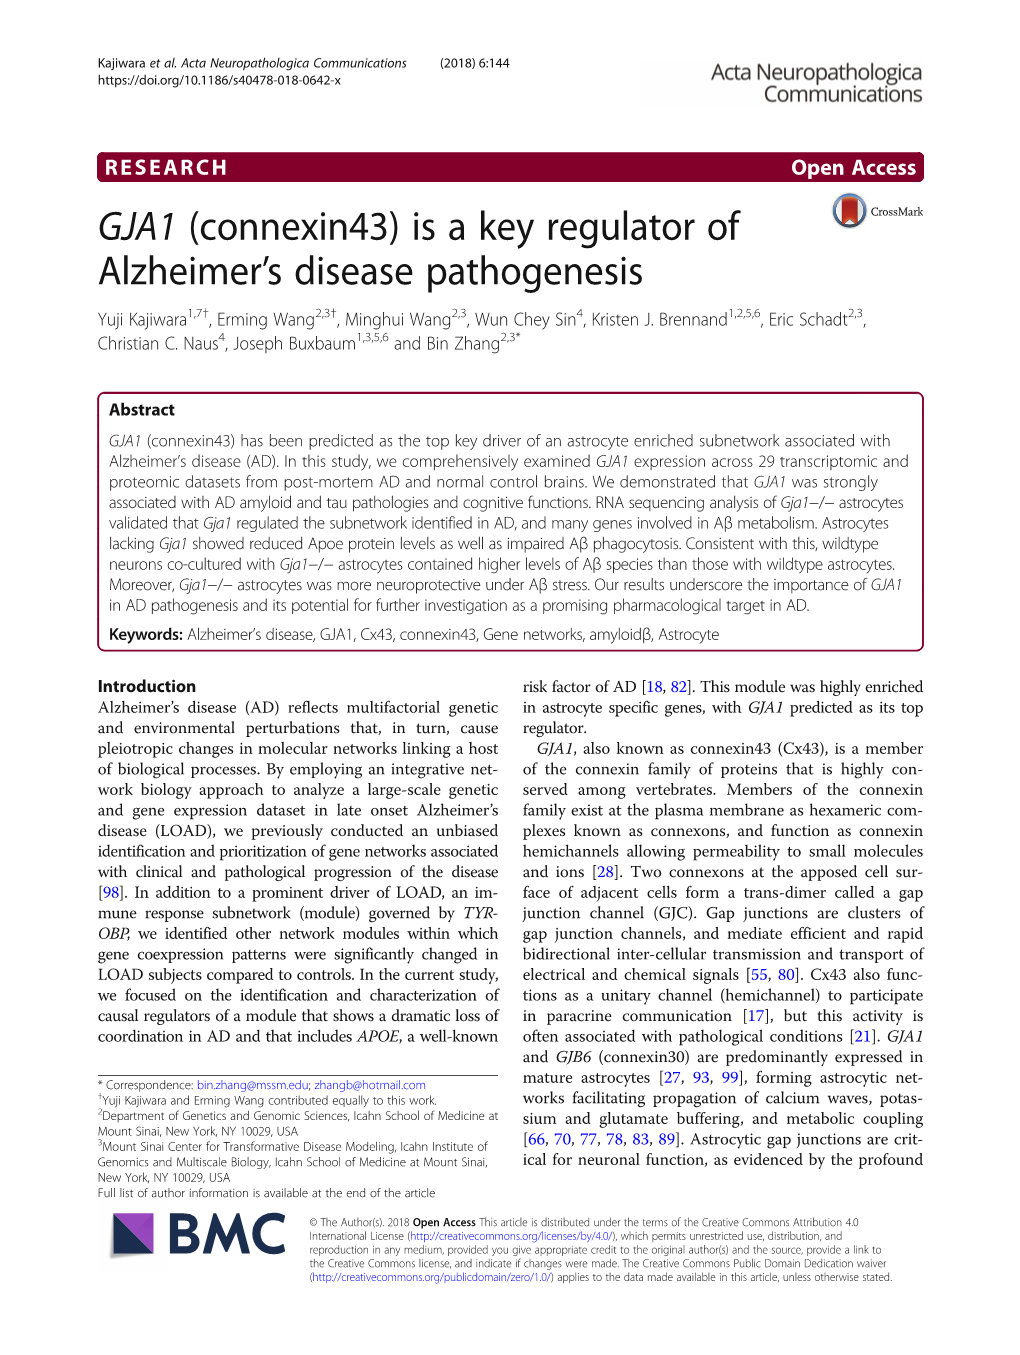 GJA1 (Connexin43) Is a Key Regulator of Alzheimer's Disease Pathogenesis